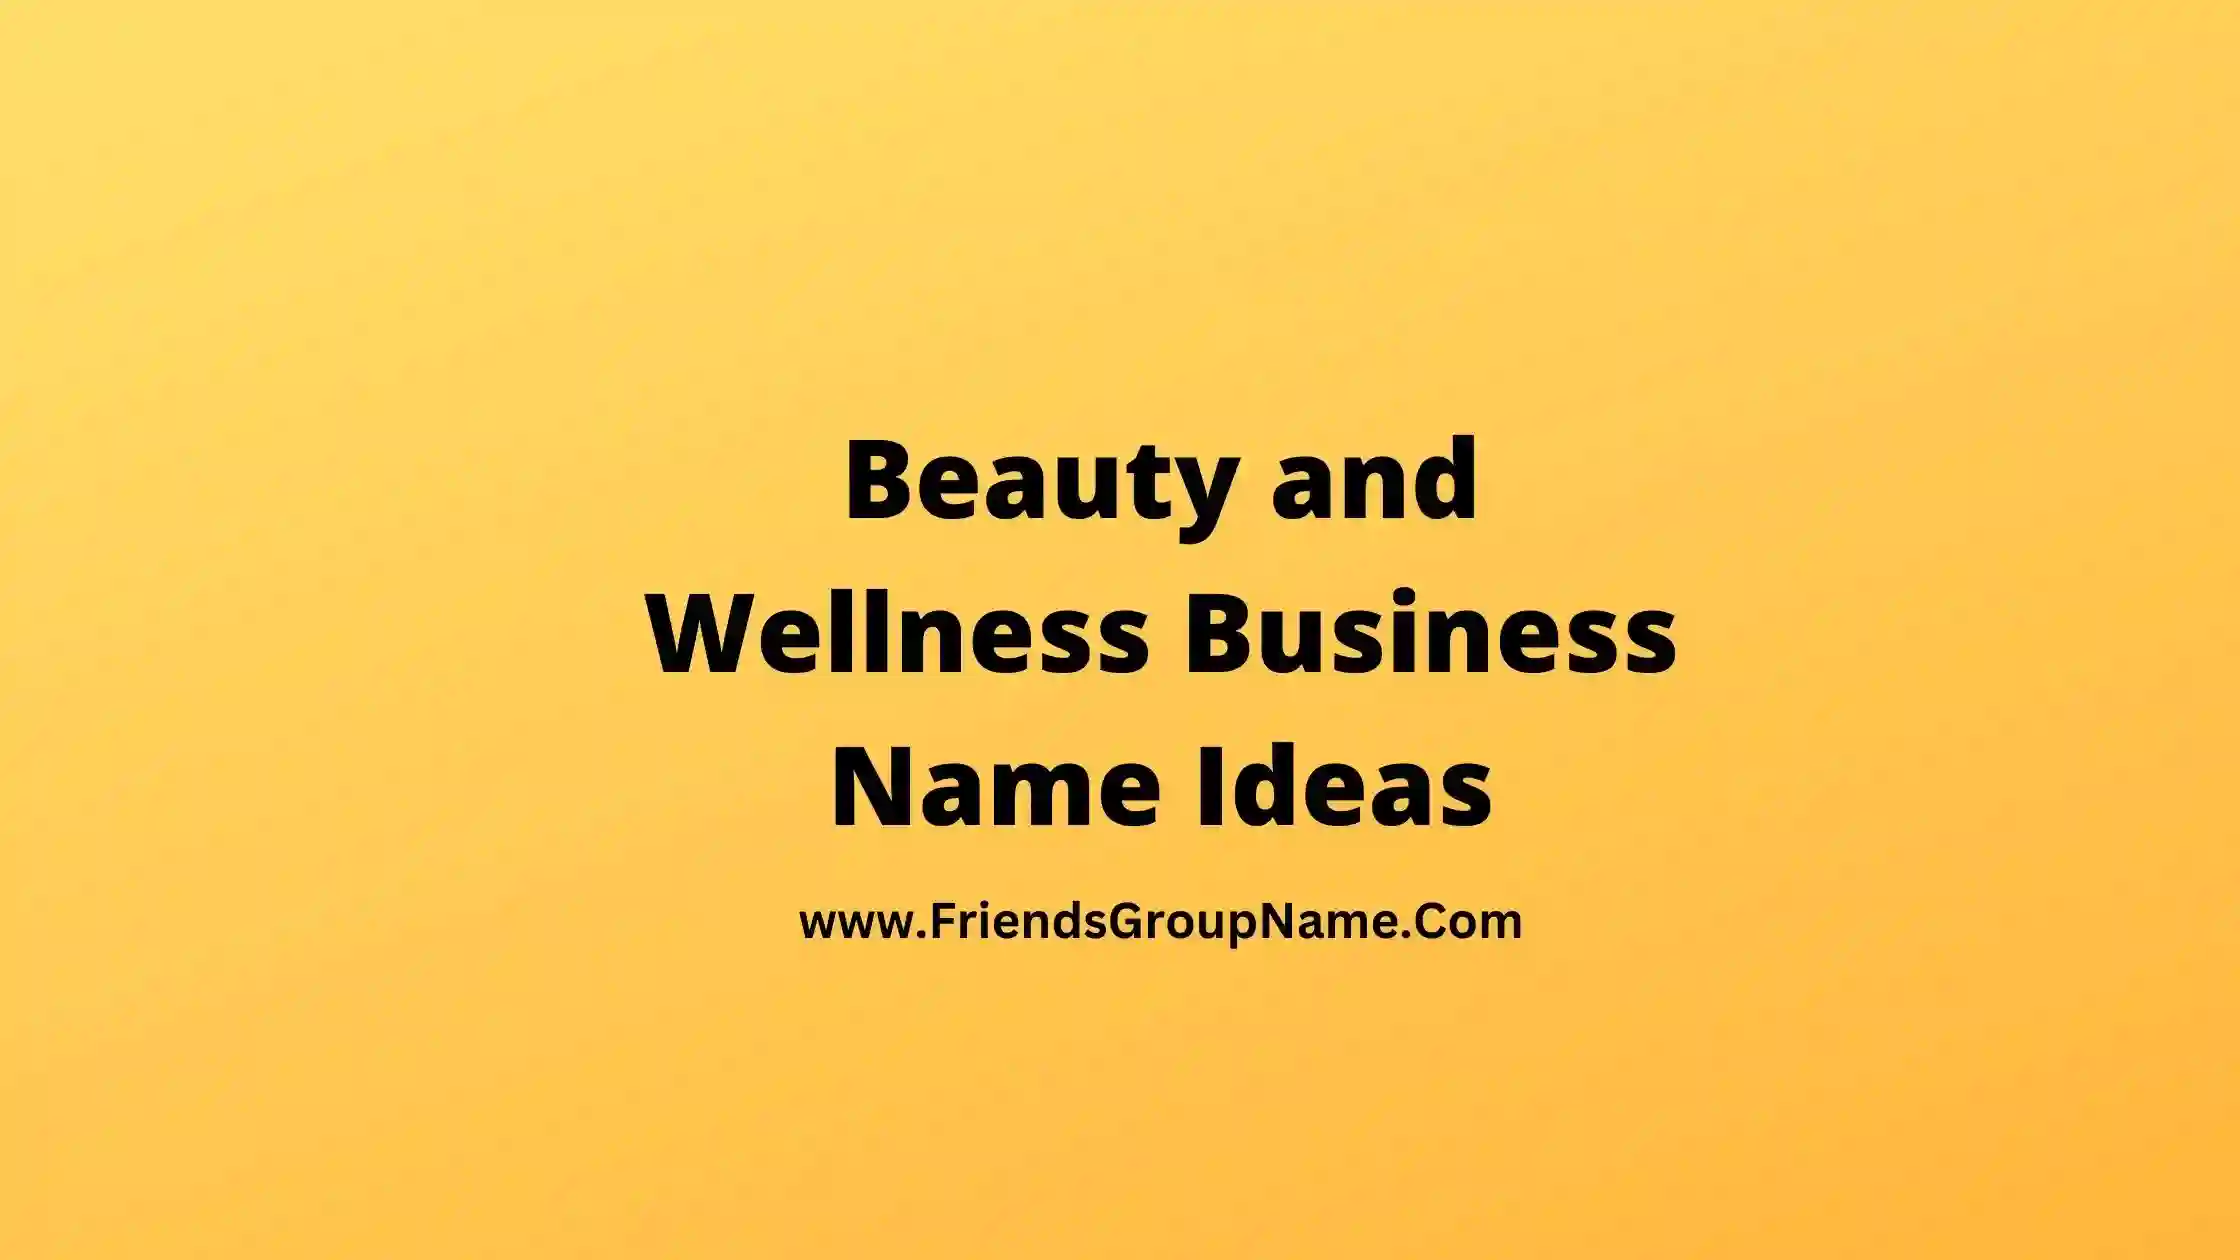 Beauty and Wellness Business Name Ideas